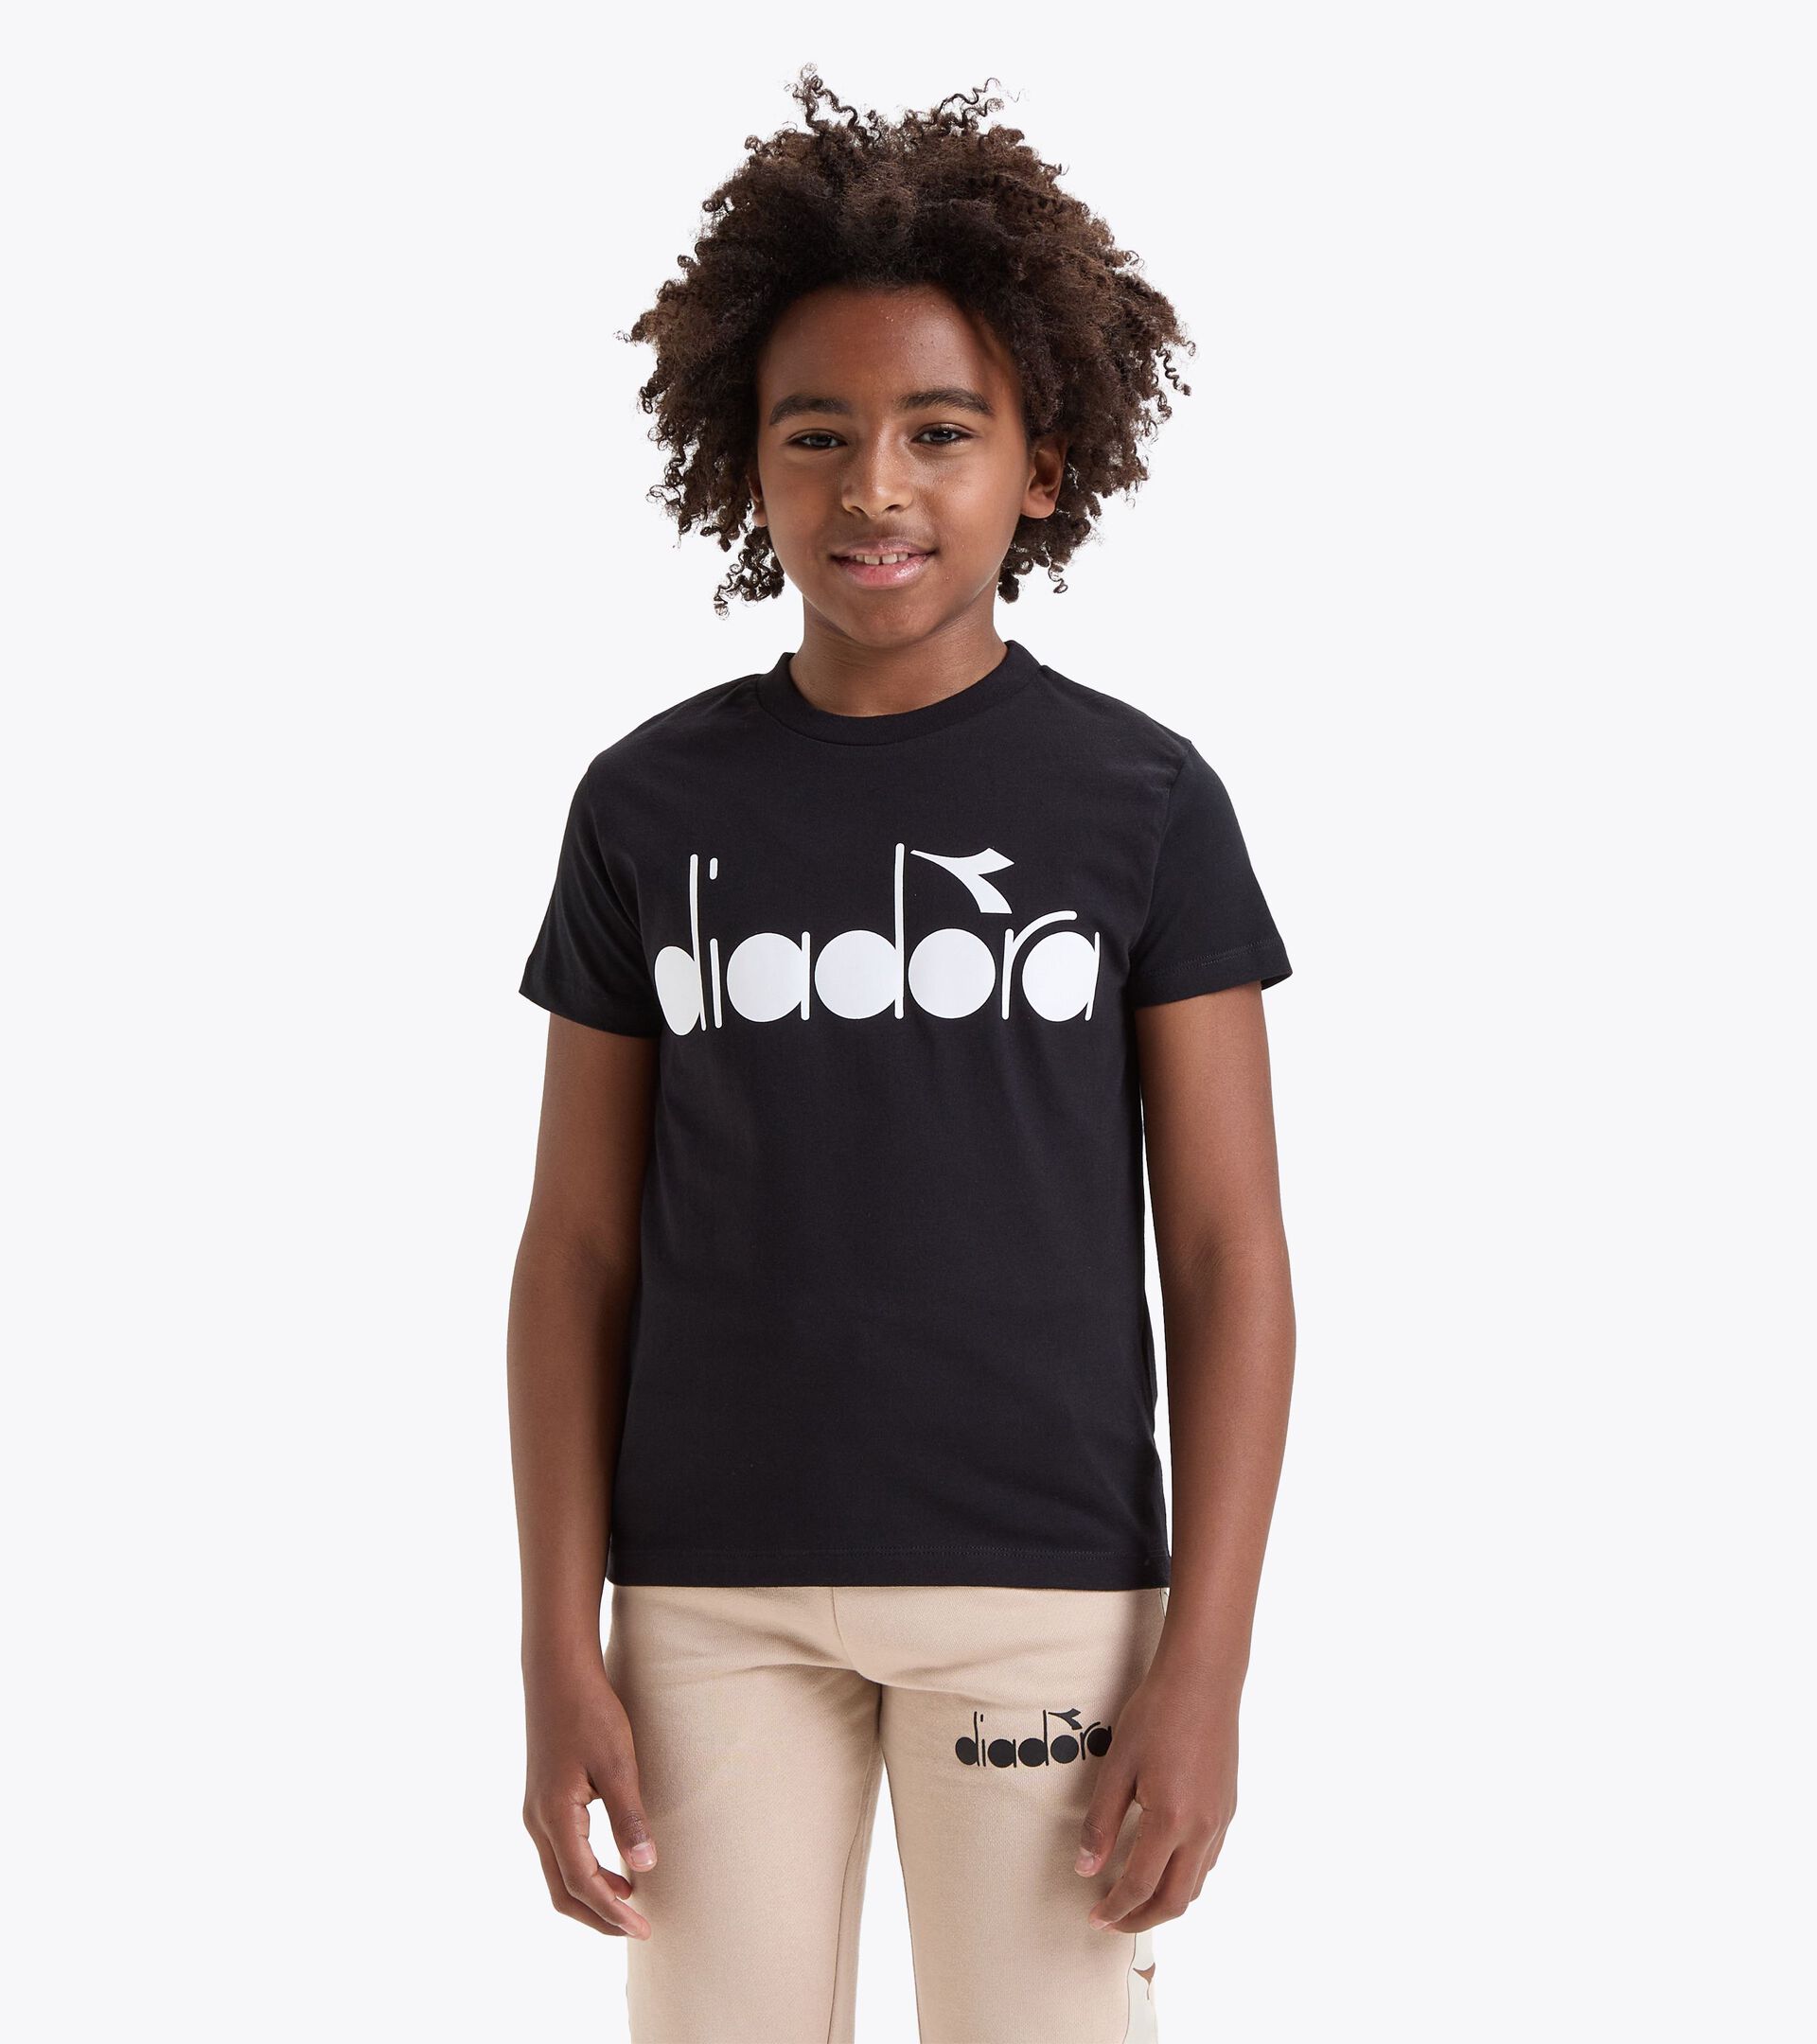 T-shirt 100% cotone - Bambino JB.T-SHIRT SS LOGO NATURE NERO - Diadora